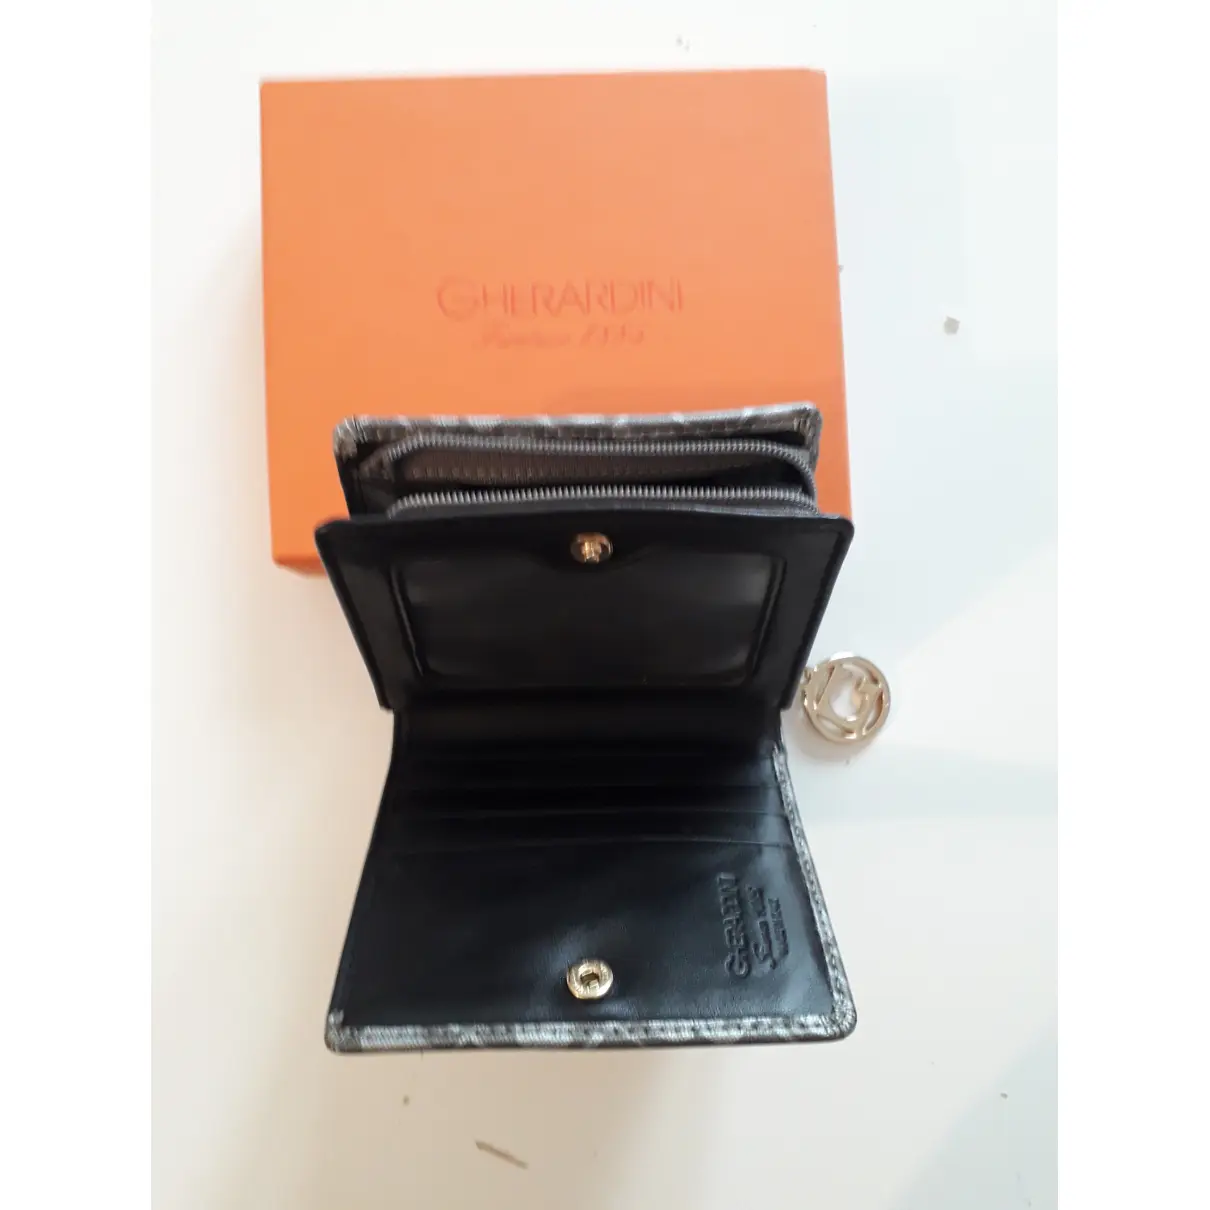 Buy Gherardini Leather wallet online